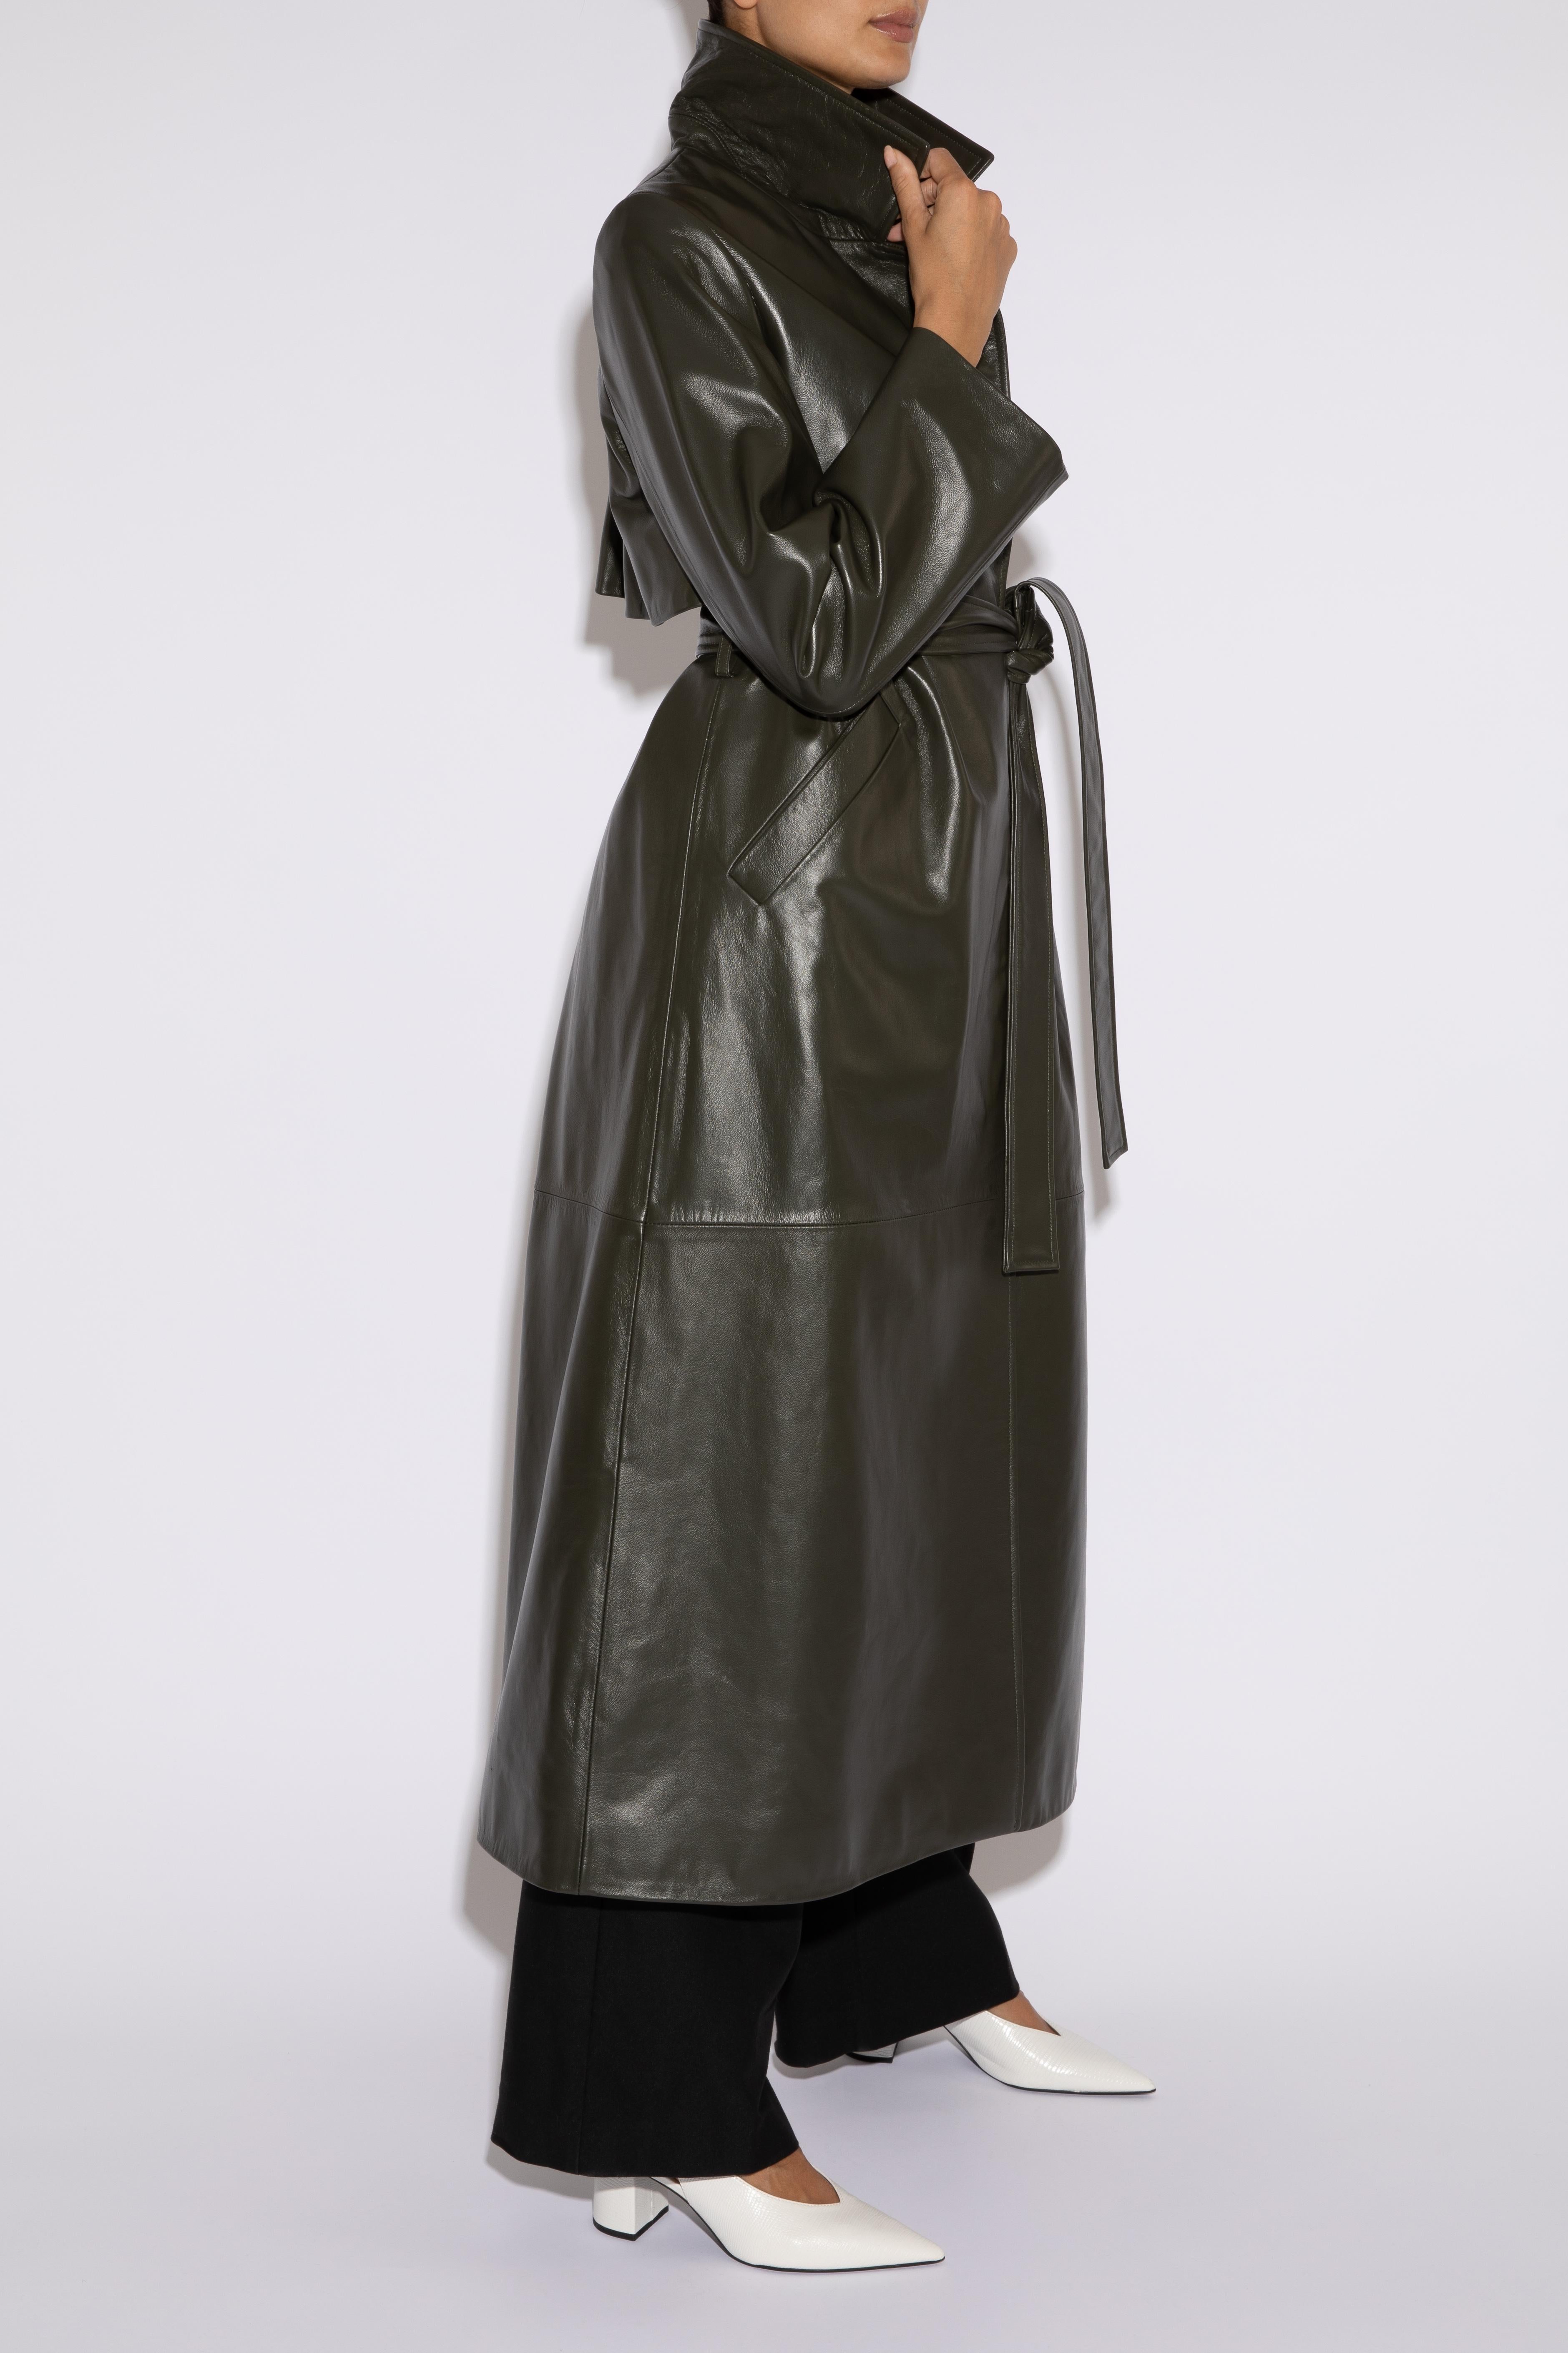 Women's Verheyen London Leather Trench Coat in Dark Khaki Green - Size uk 12 For Sale